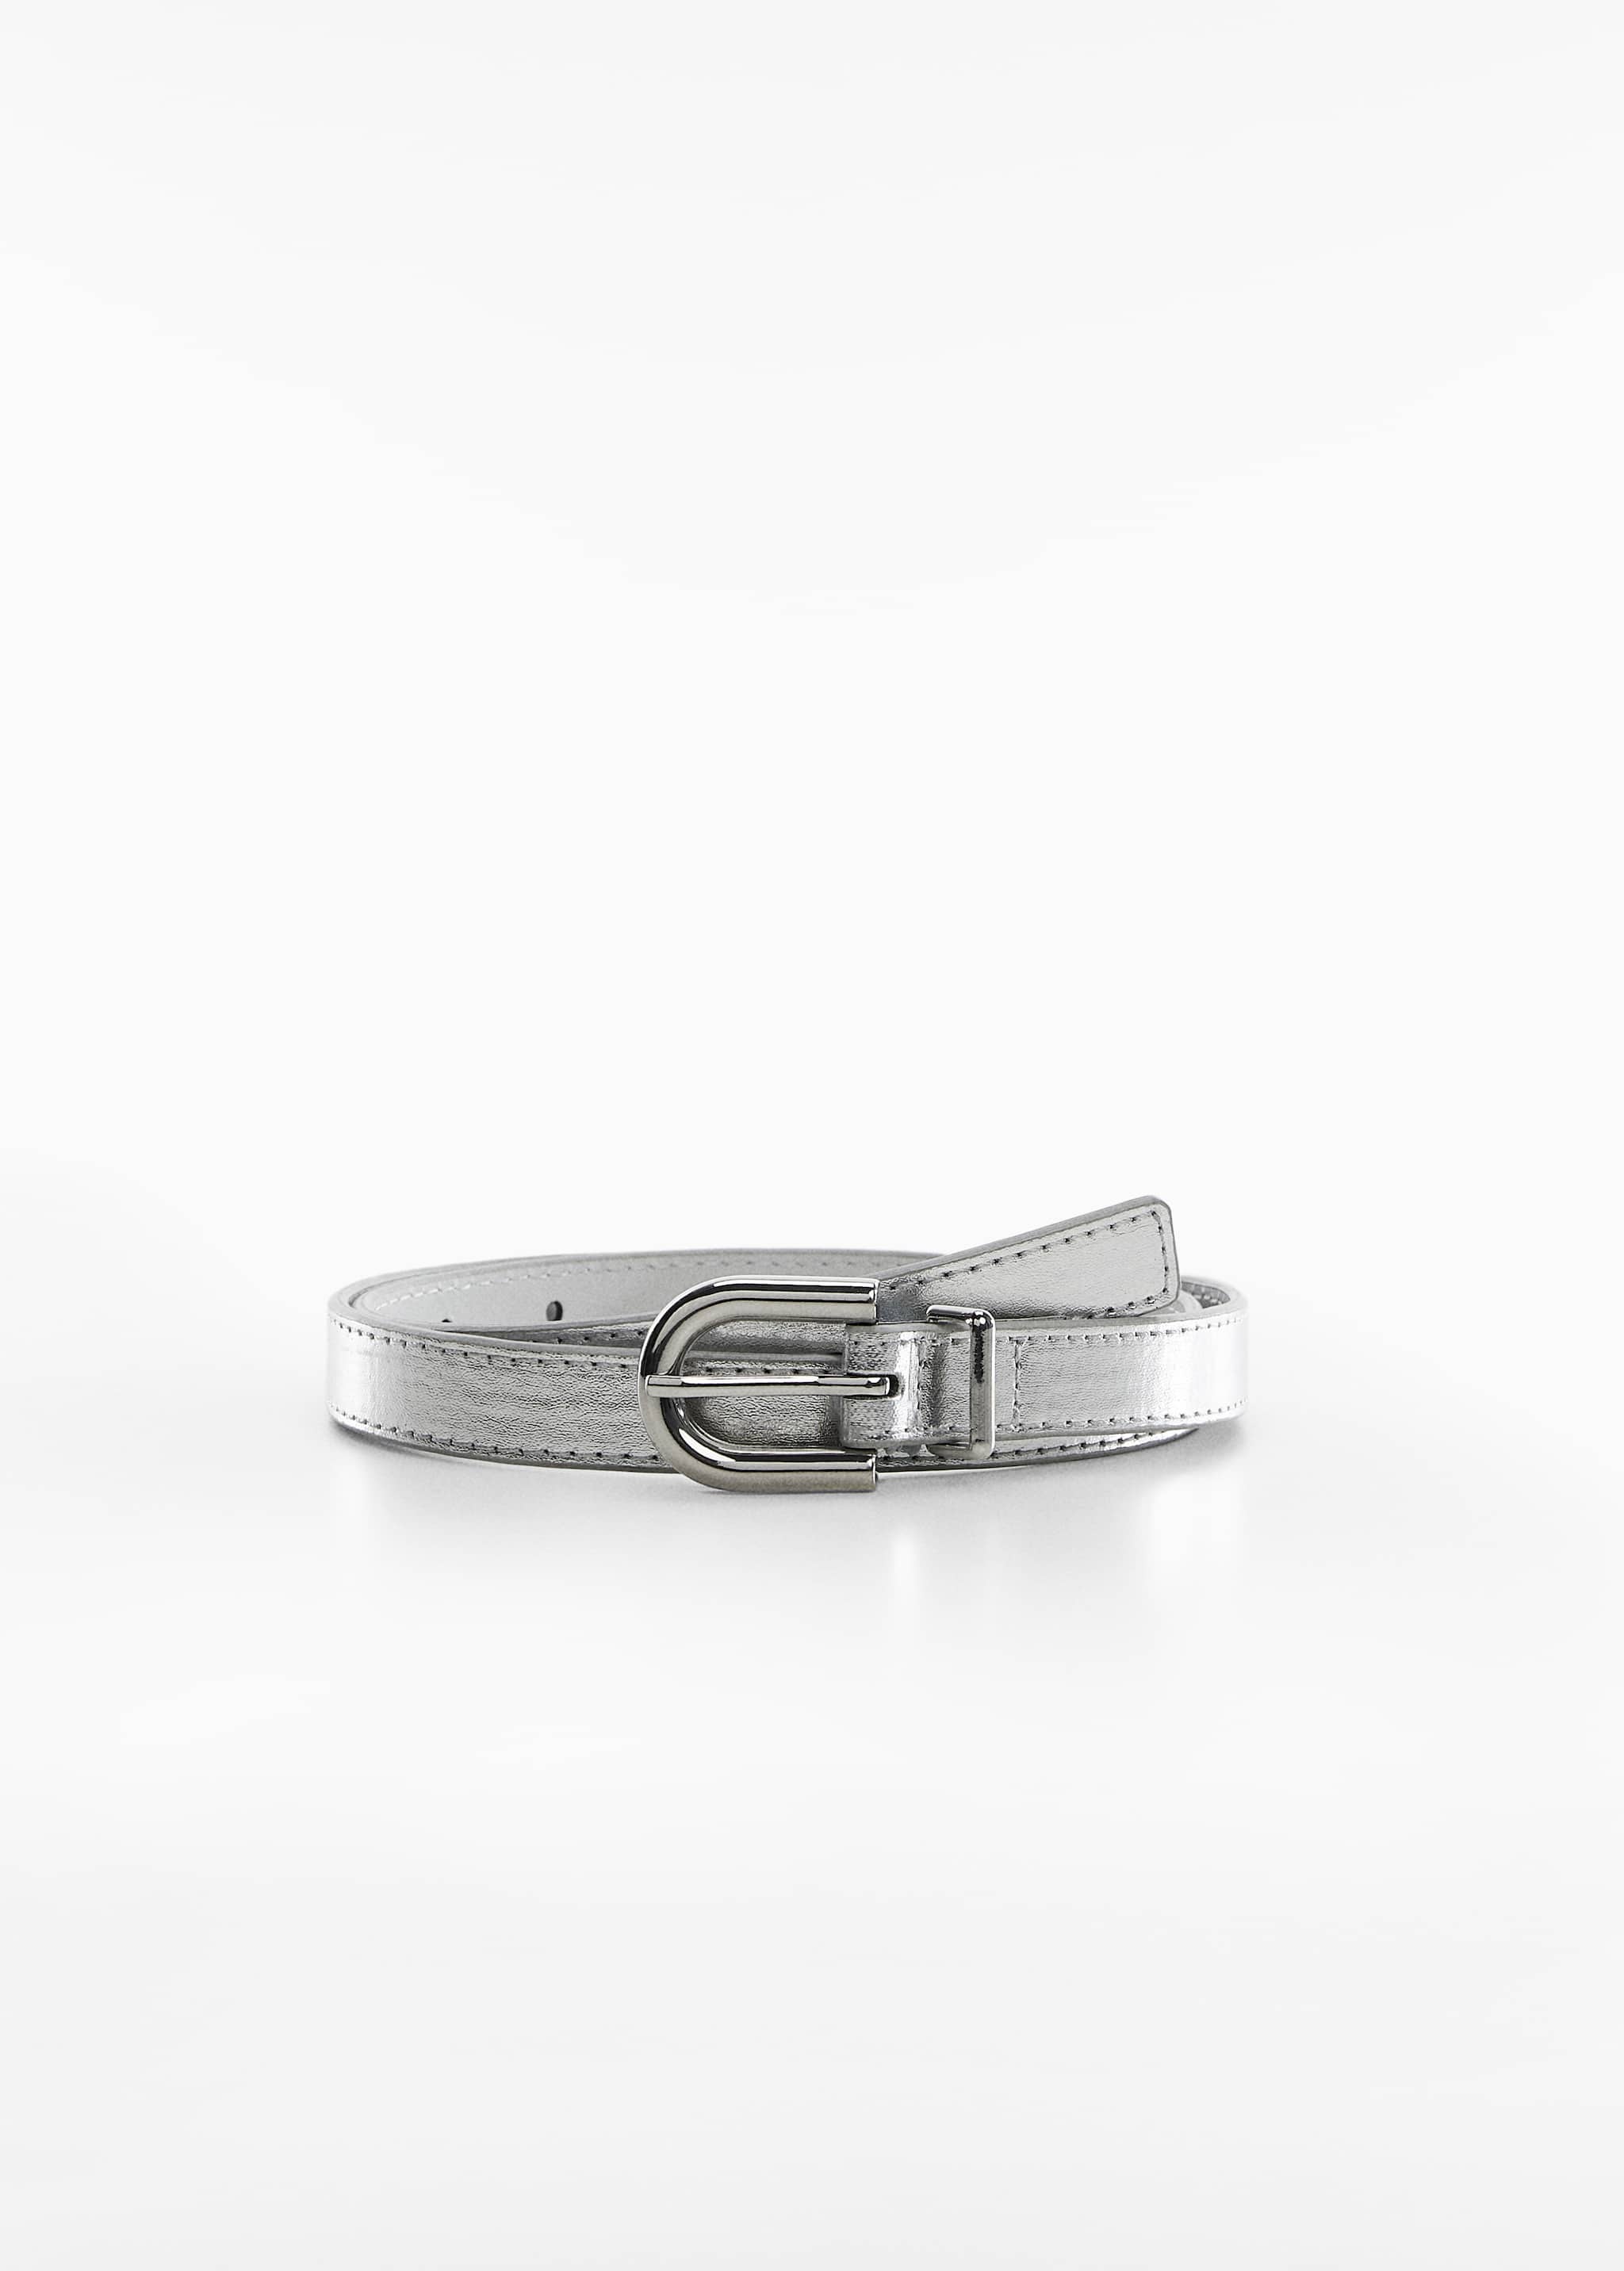 Buckle metallic belt - Article without model